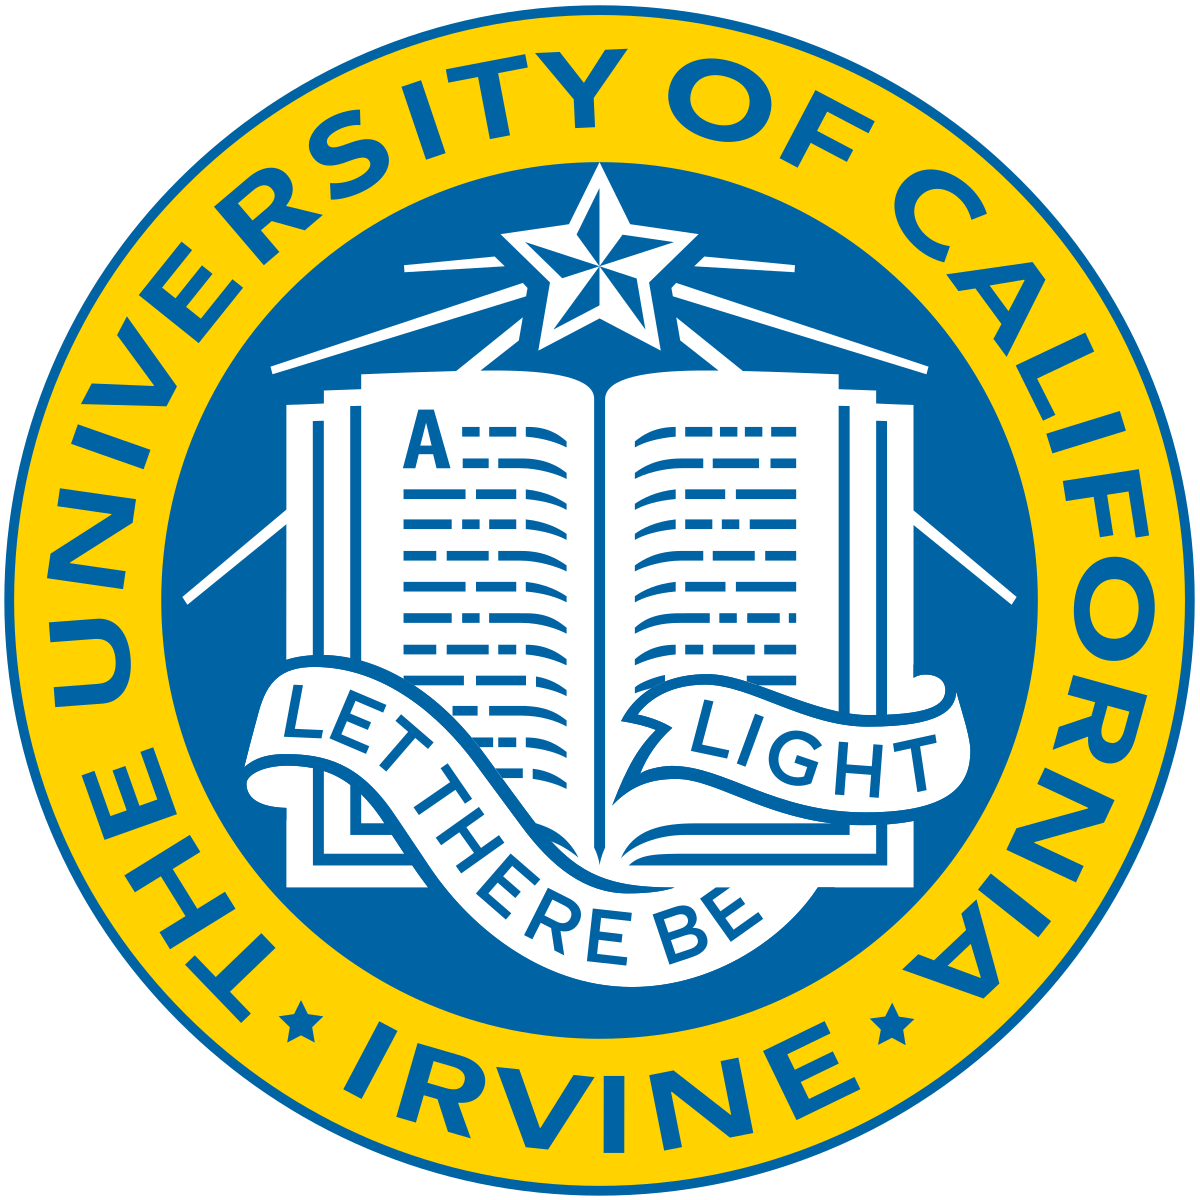 University of California, Irvine - Wikipedia